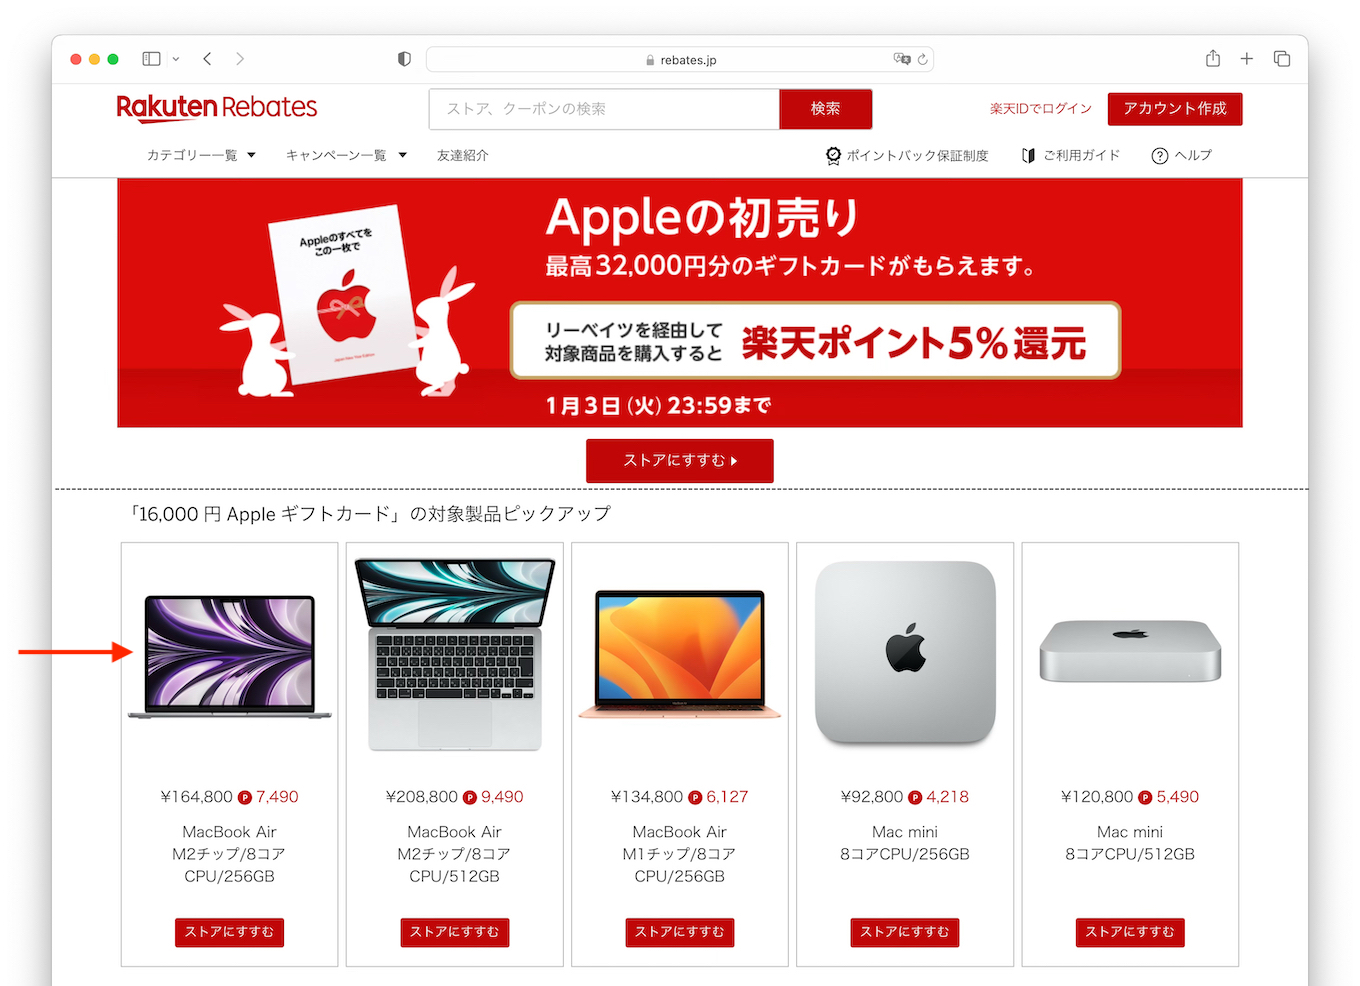 Rakuten Rebates Appleの初売り対象商品